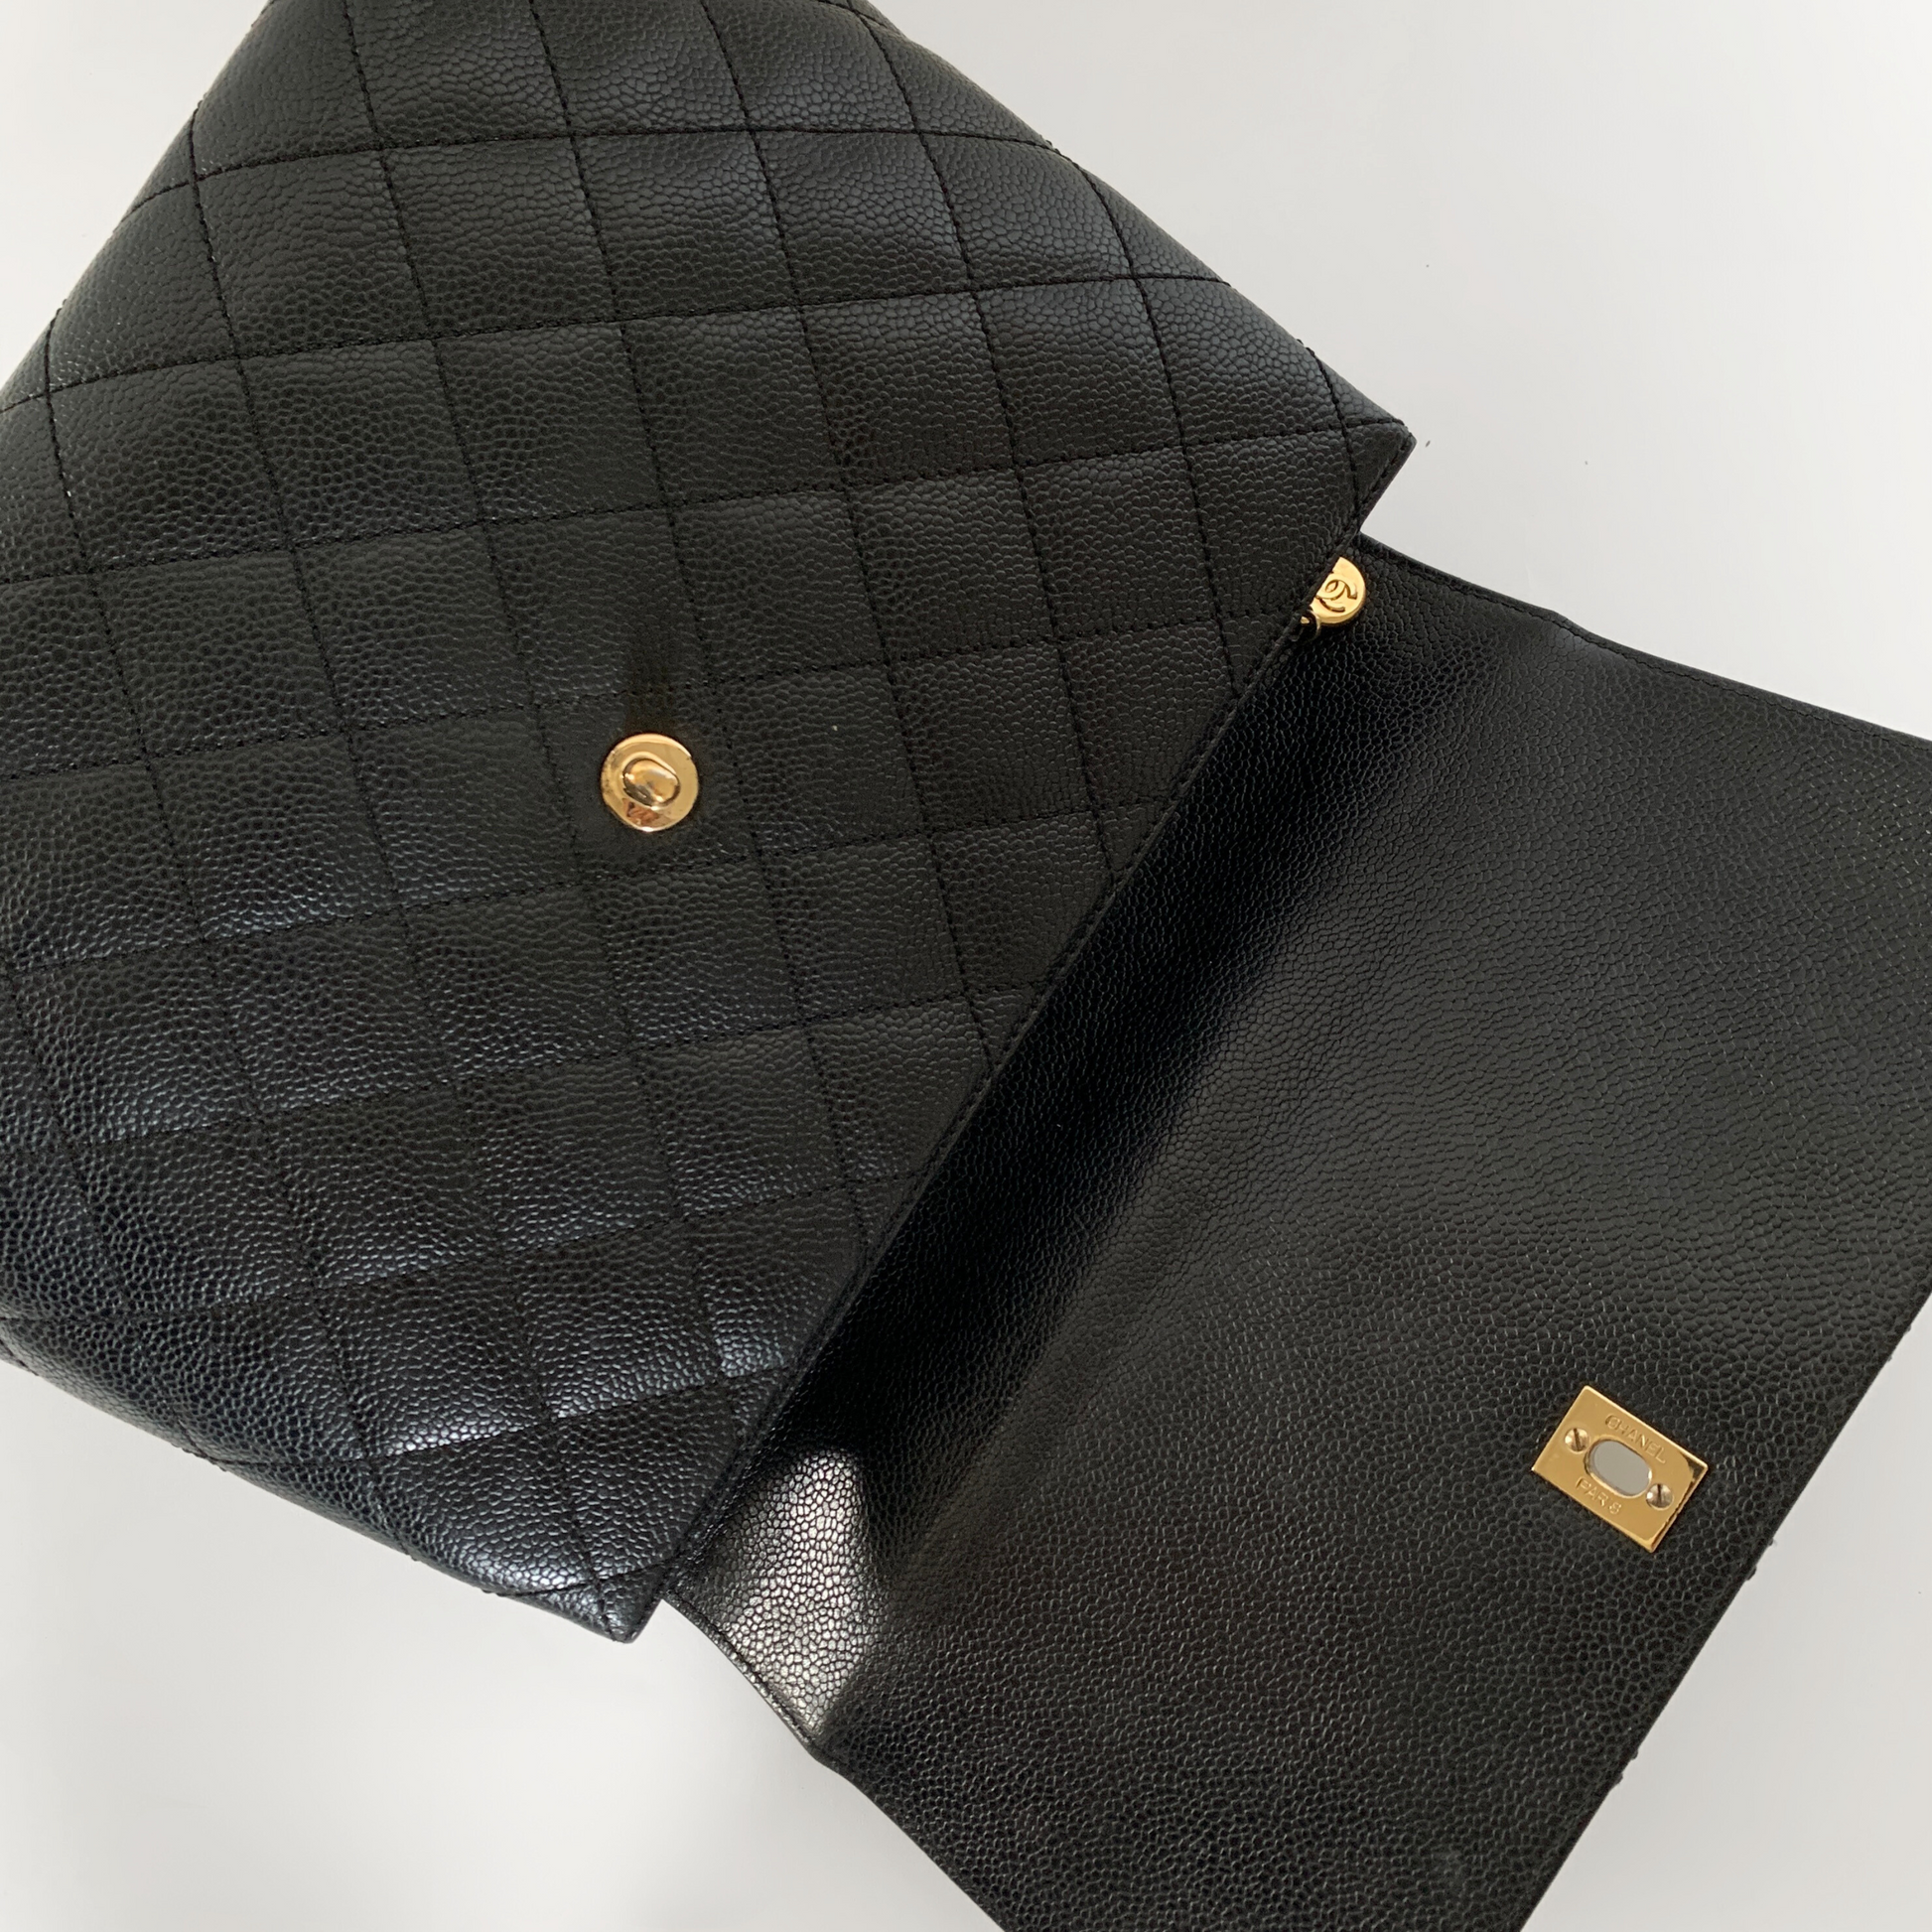 Chanel Chanel Coco Top Handle Bag Caviar Leather - Handbags - Etoile Luxury Vintage